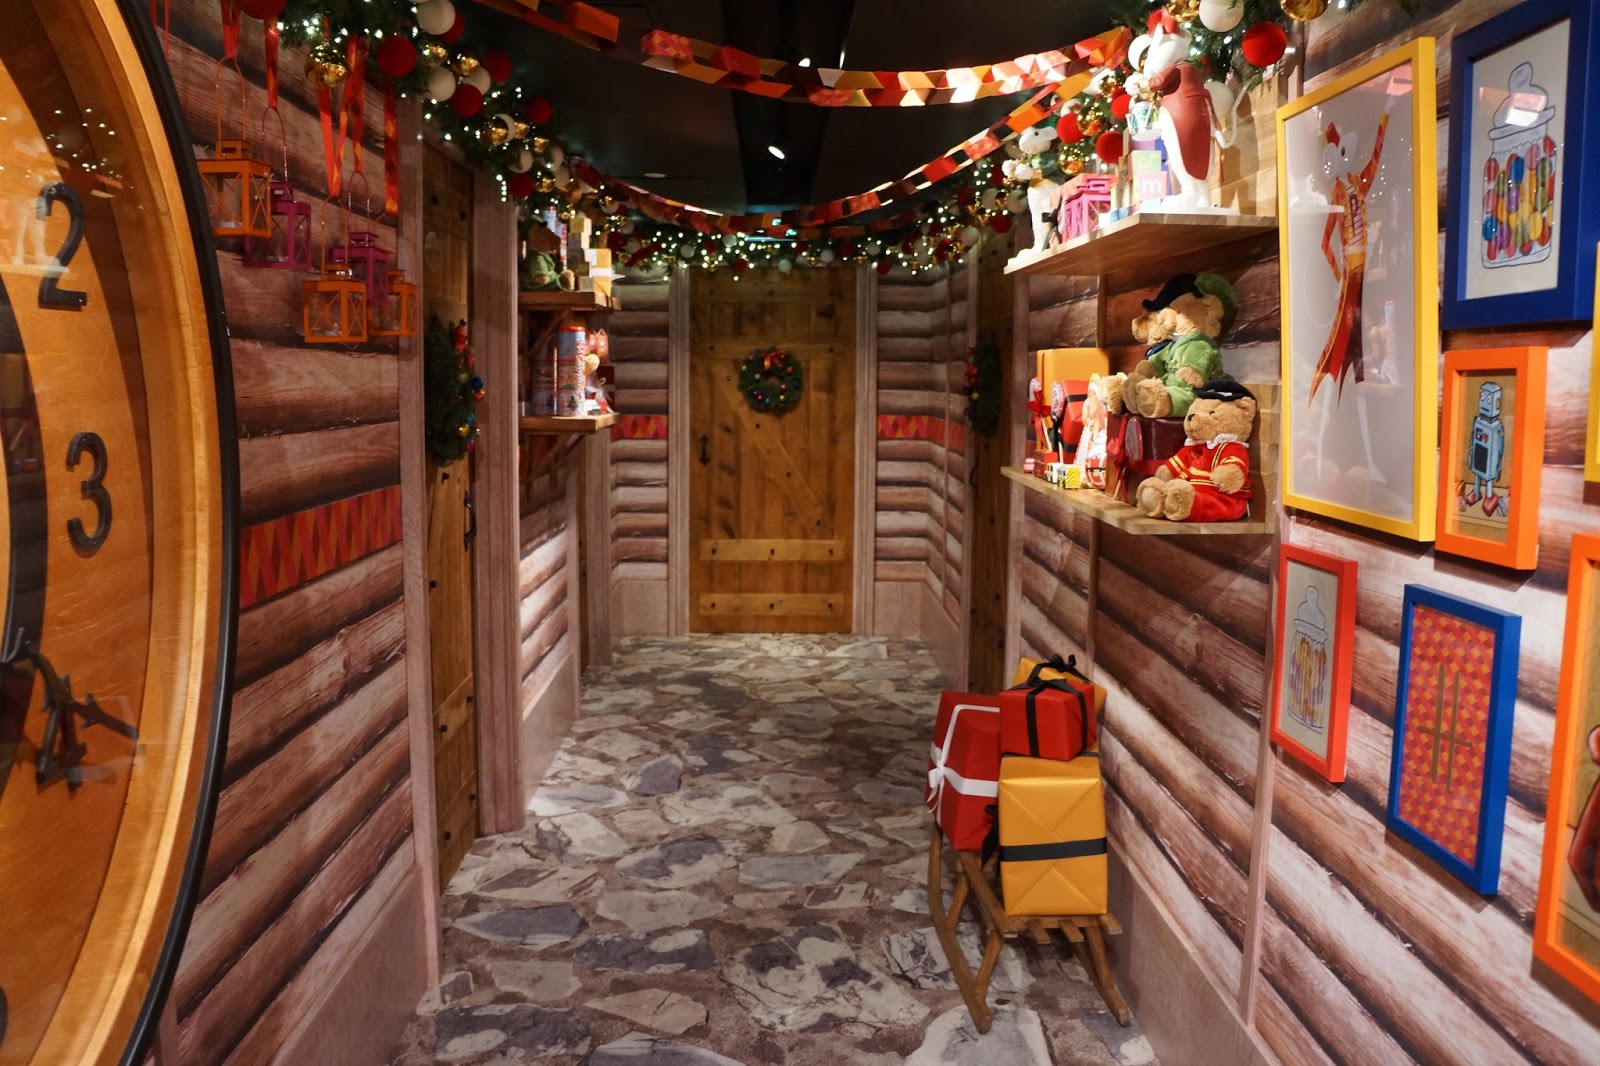 harrods christmas grotto 2015 waiting area for santa